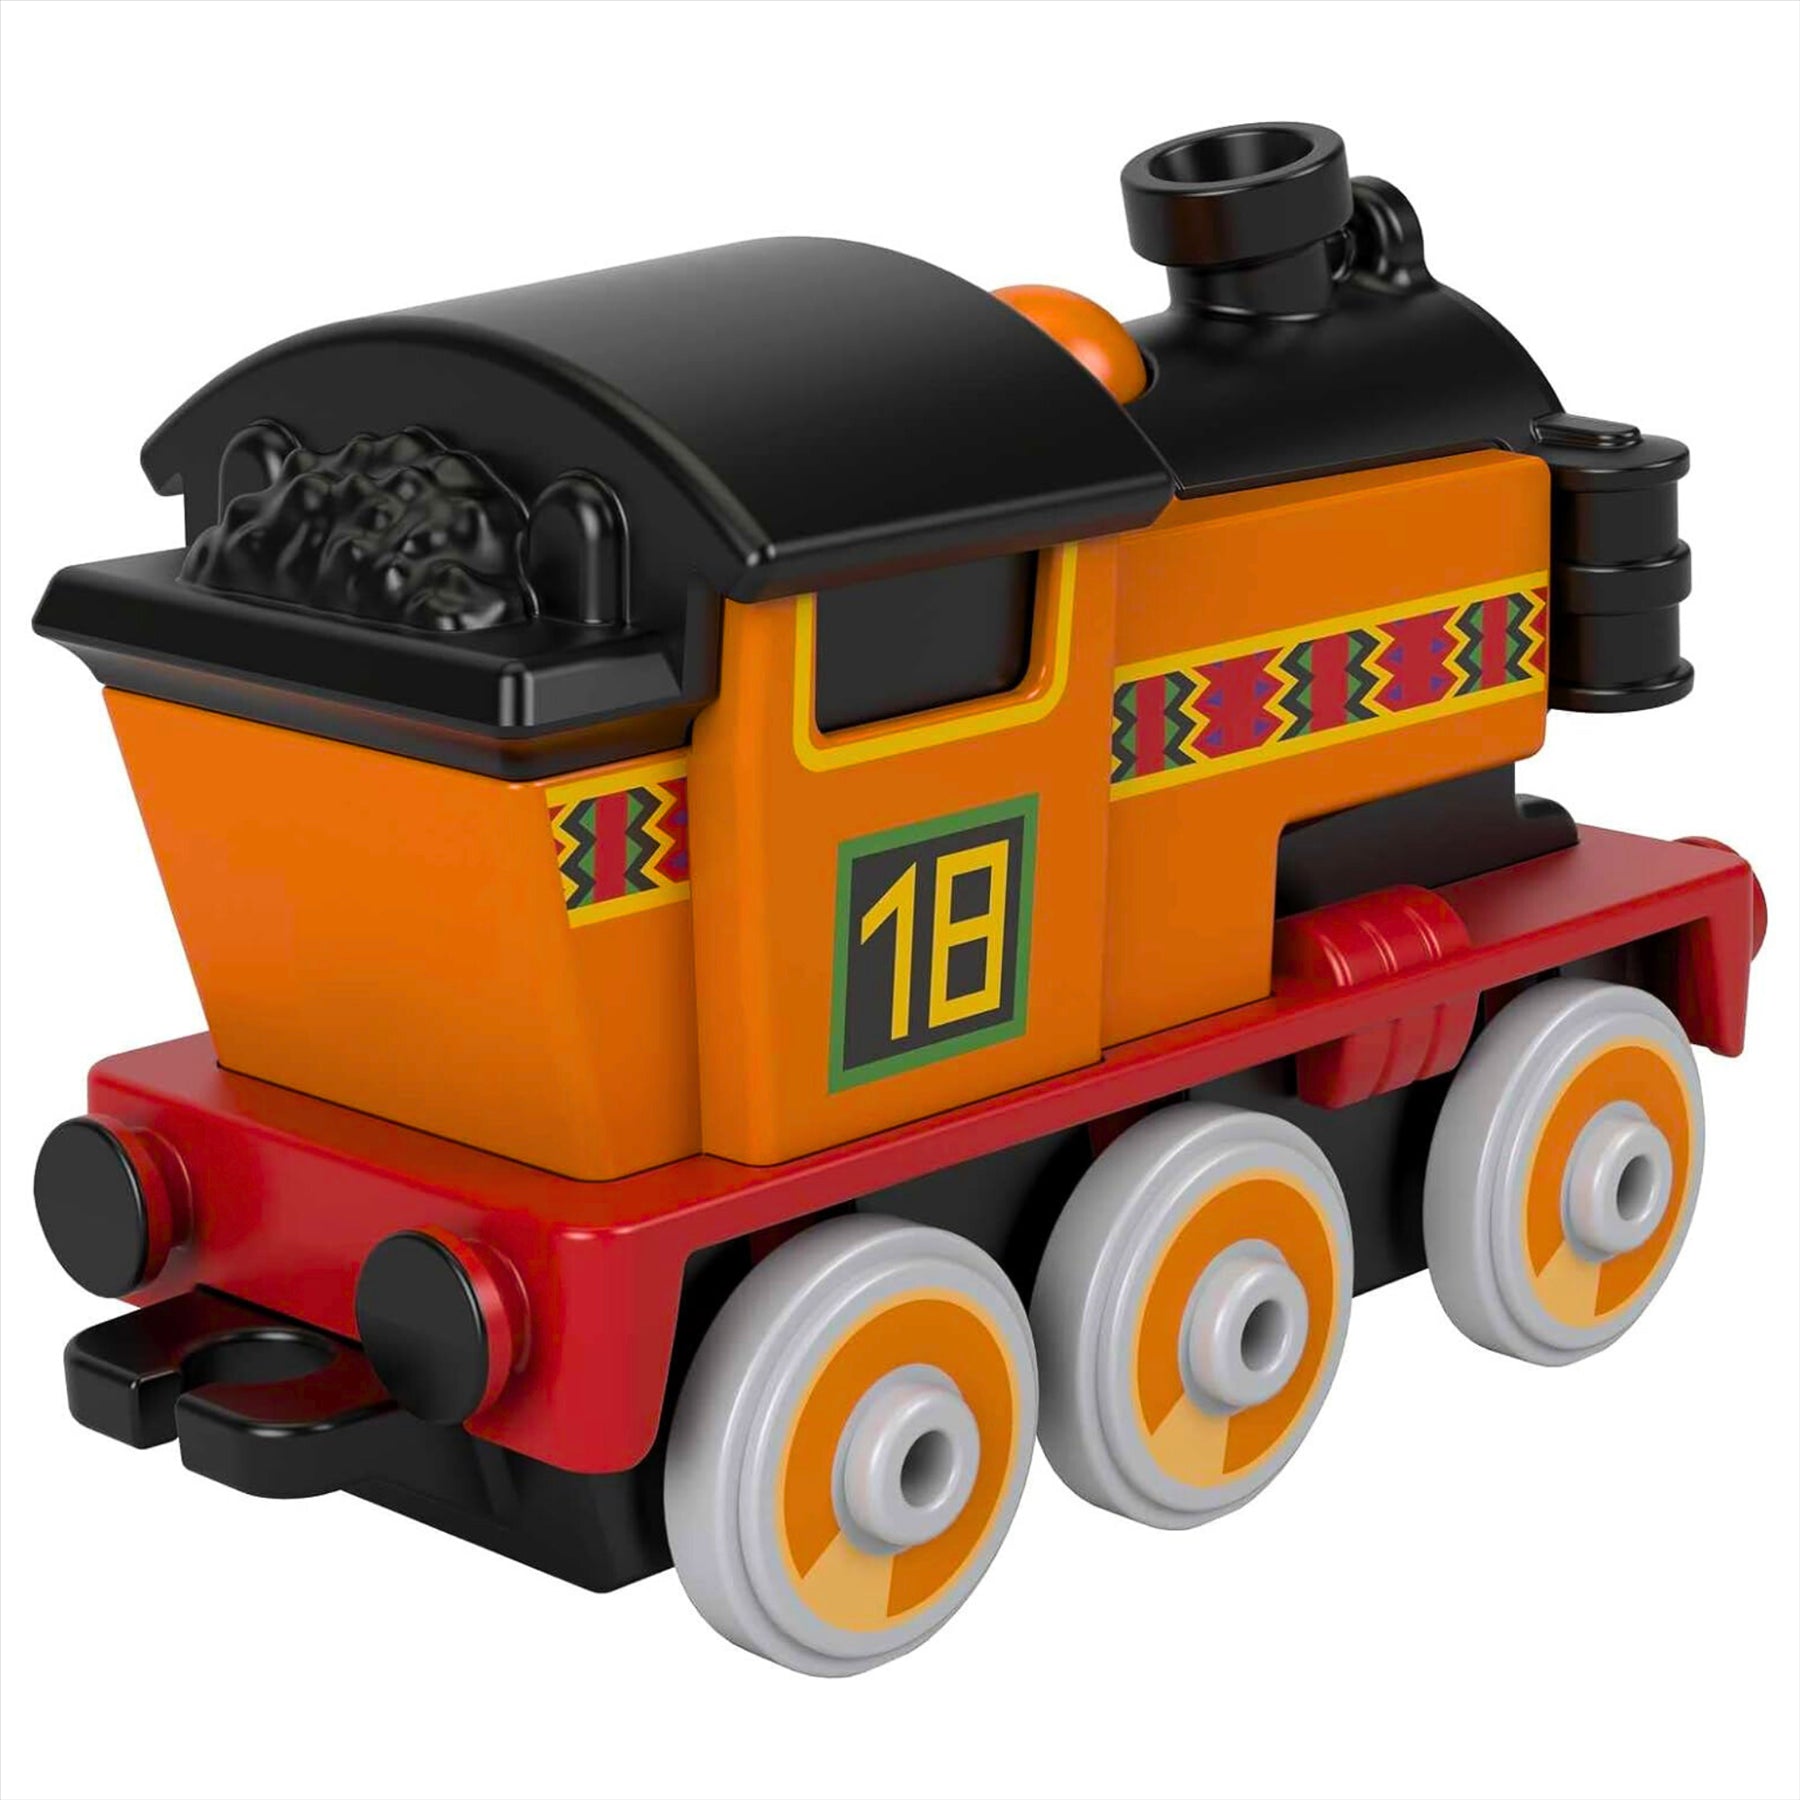 Thomas & Friends Nia Toy Train Diecast Metal Engine 8cm Push-Along Vehicle - Toptoys2u